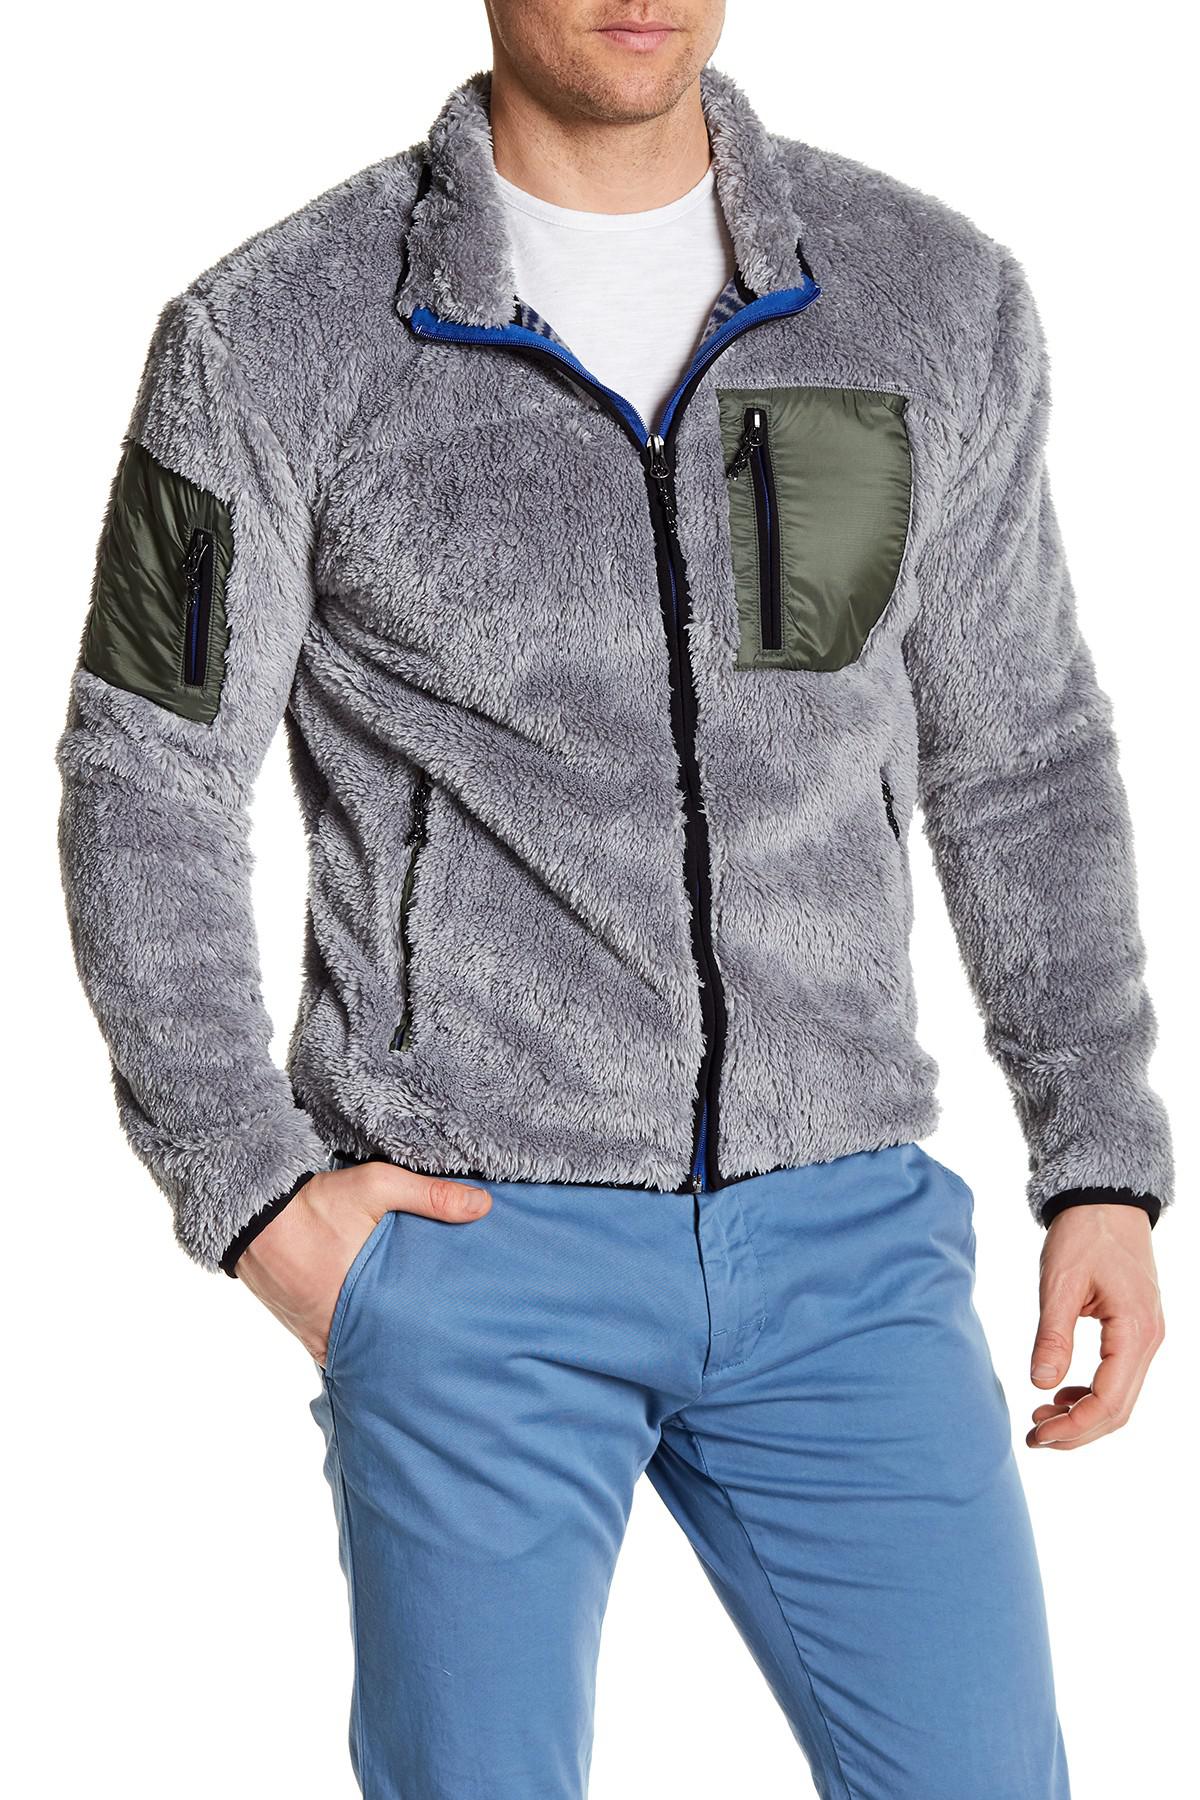 Hawke & Co. Front Zip Fleece Contrast Jacket in Grey (Gray) for Men - Lyst